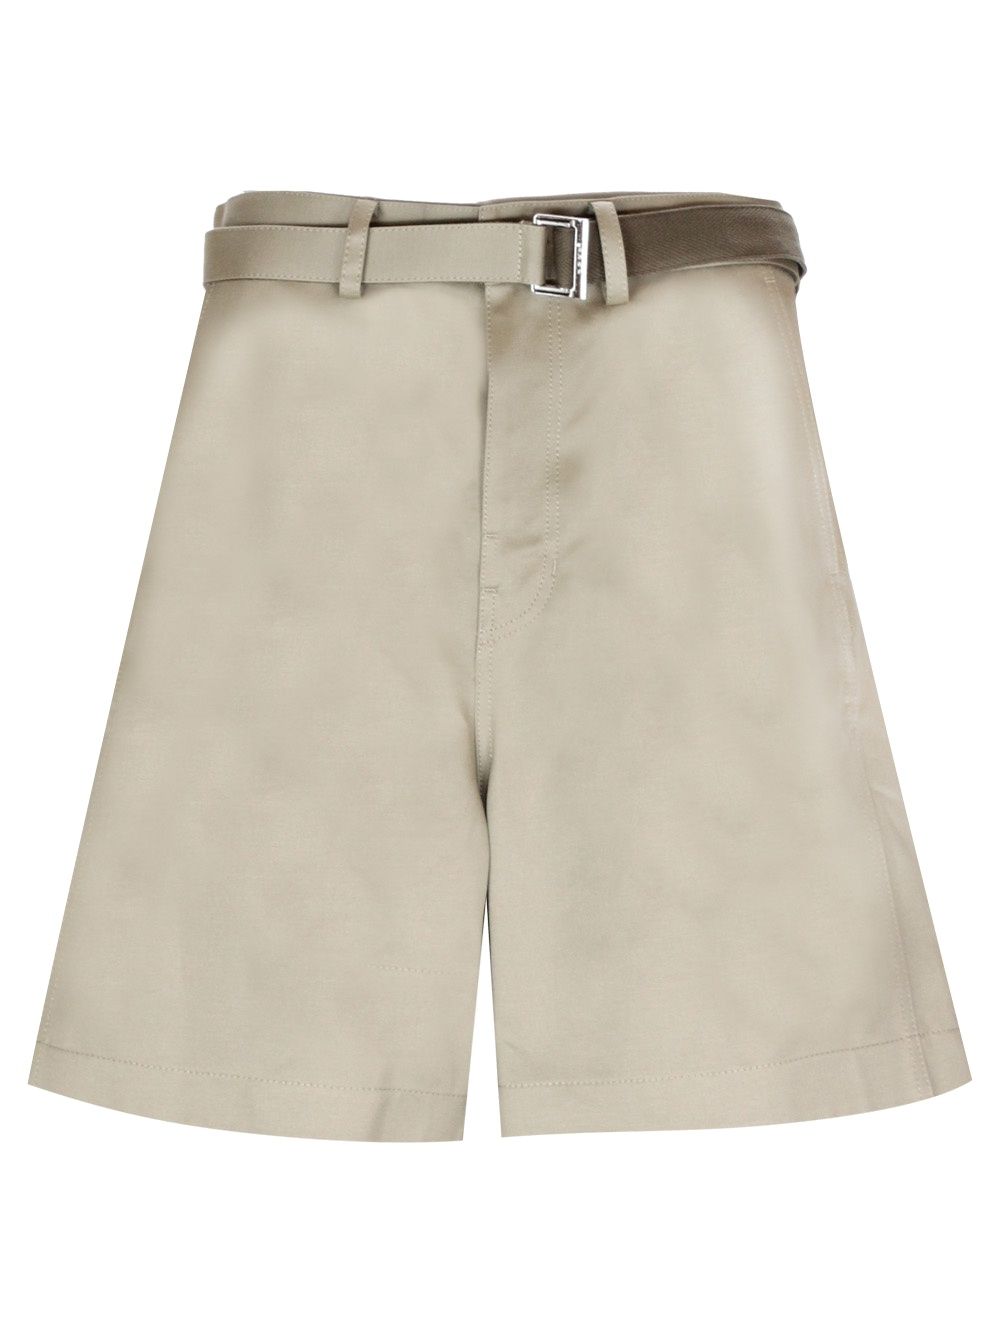 Bermuda shorts in cotton twill